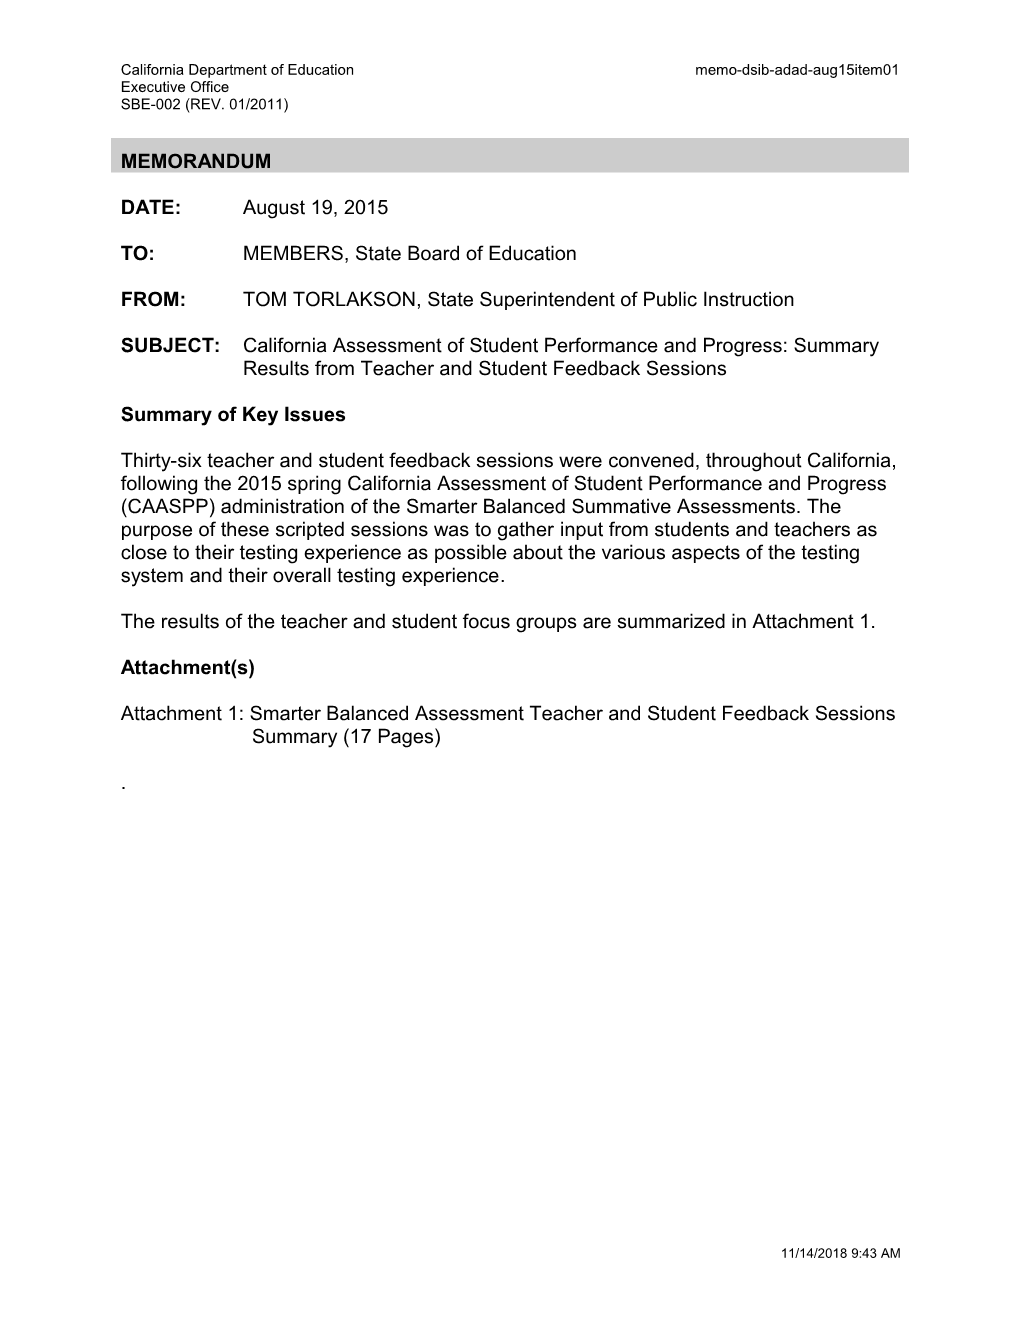 August 2015 Memo DSIB ADAD Item 01 - Information Memorandum (CA State Board of Education)